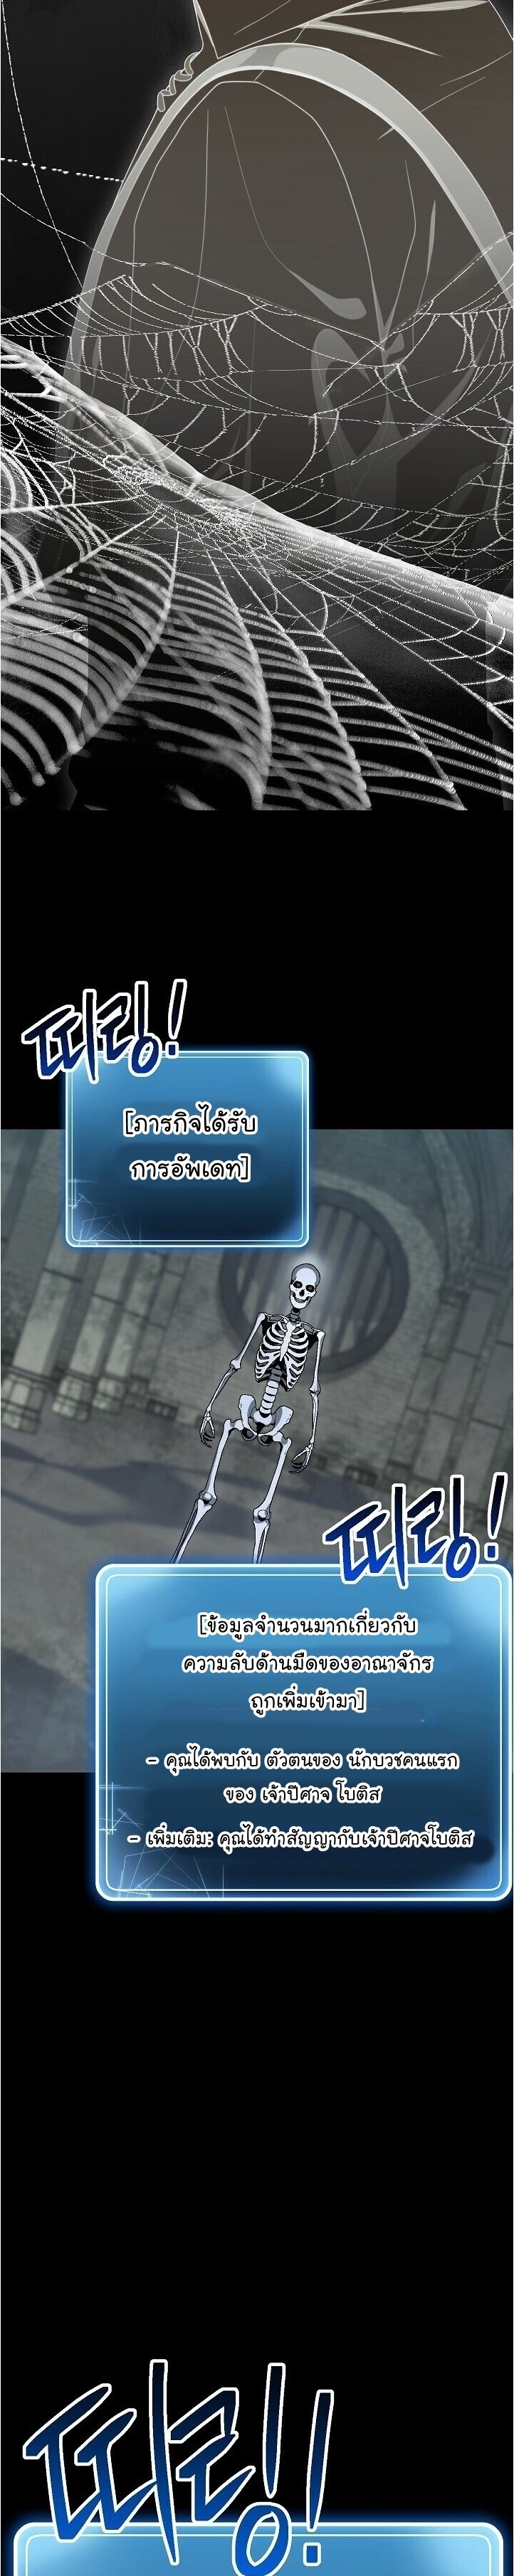 Skeleton Soldier 148 11